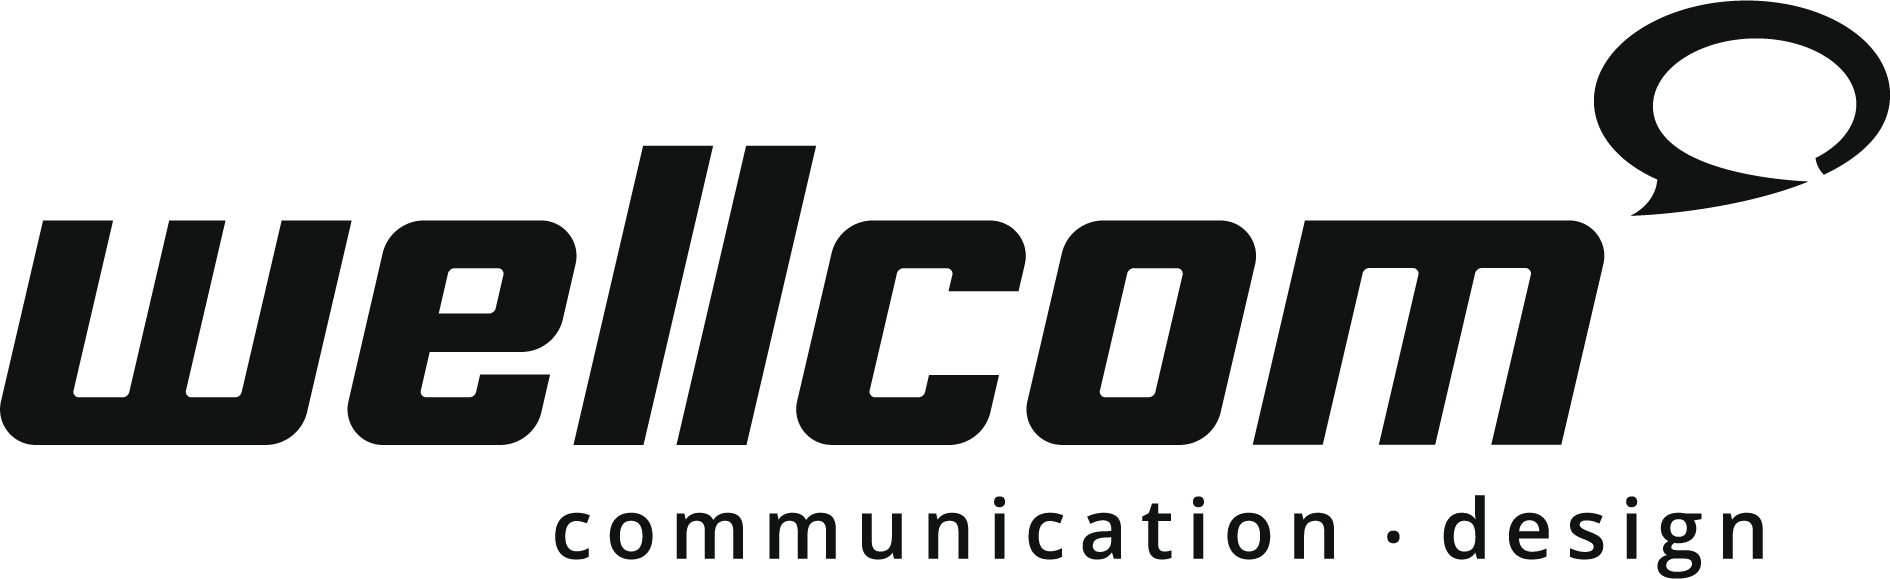 Logo_wellcom.png